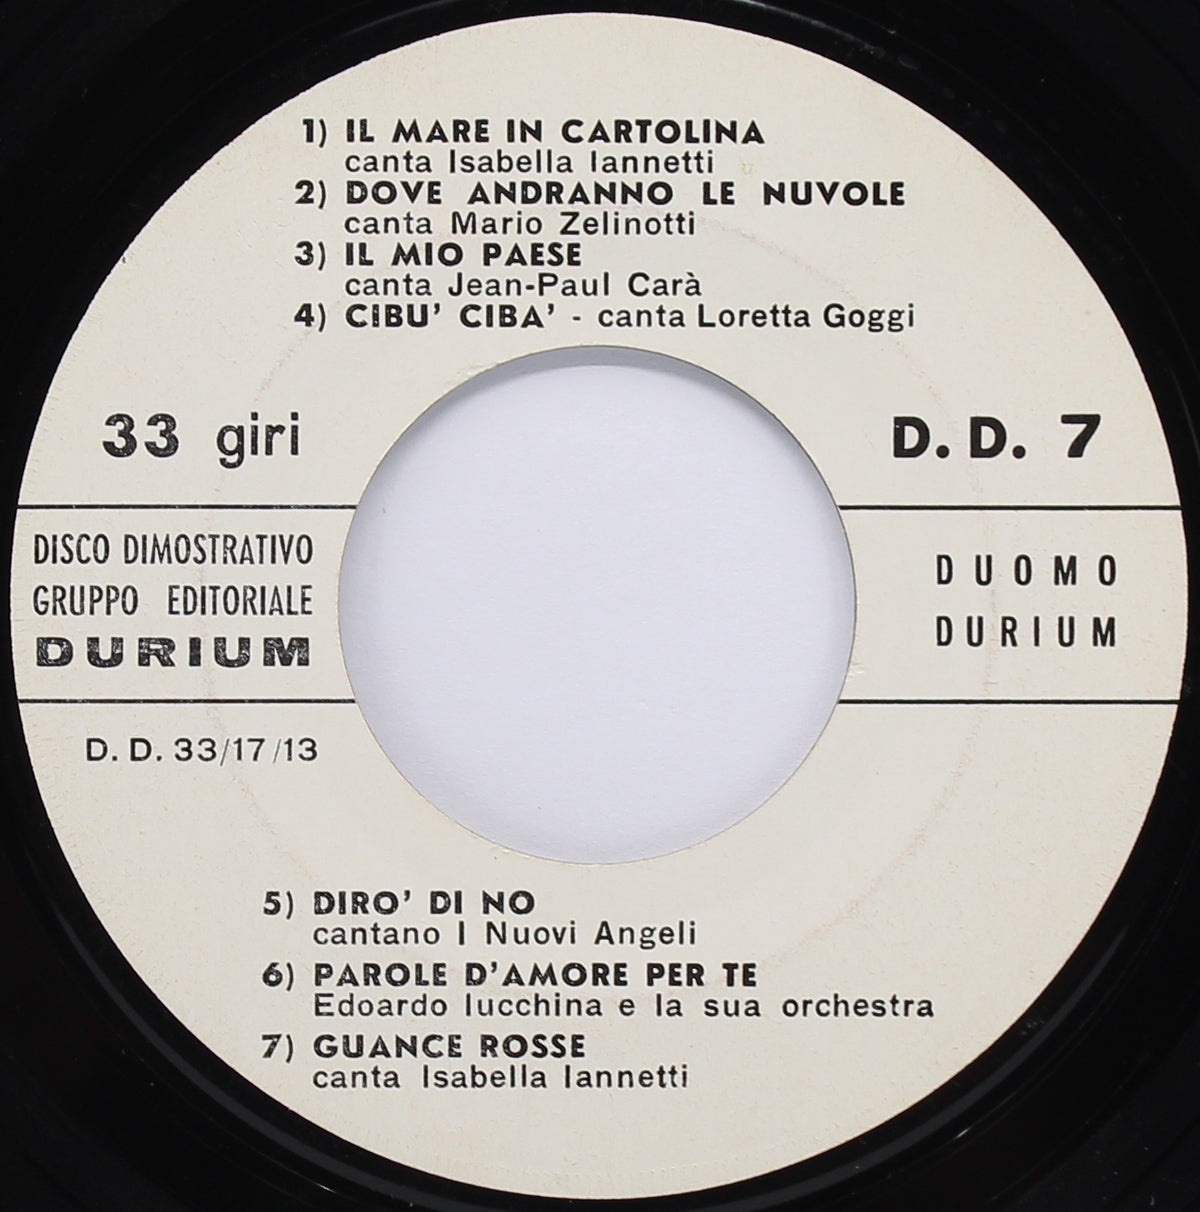 Bee Gees, Disco Dimostrativo D.D.7, Vinyl EP (33 ⅓rpm), Italy 1970  (s 1215)